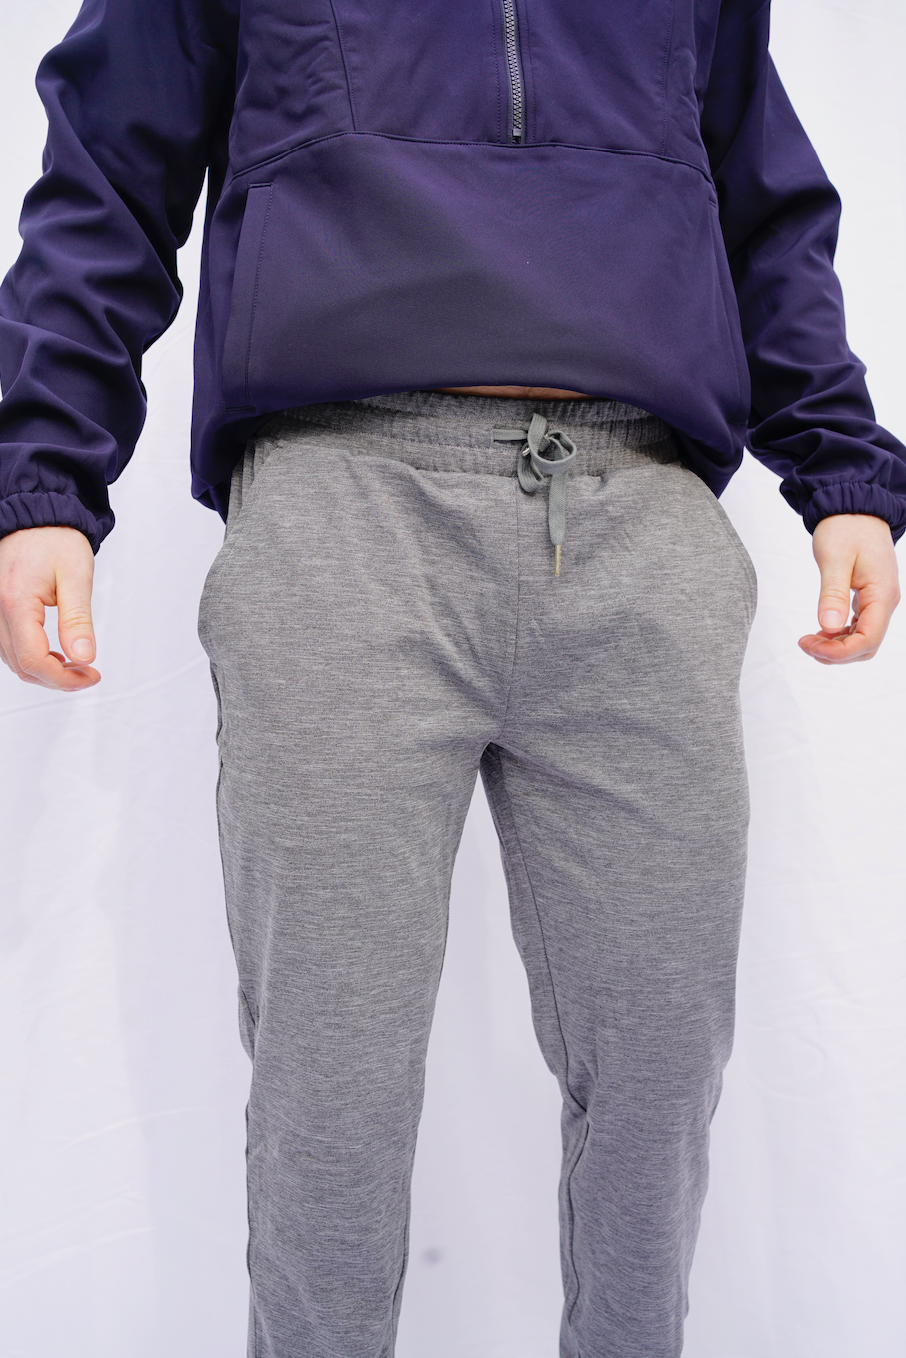 Mens Athletic Sweatpants - Grey